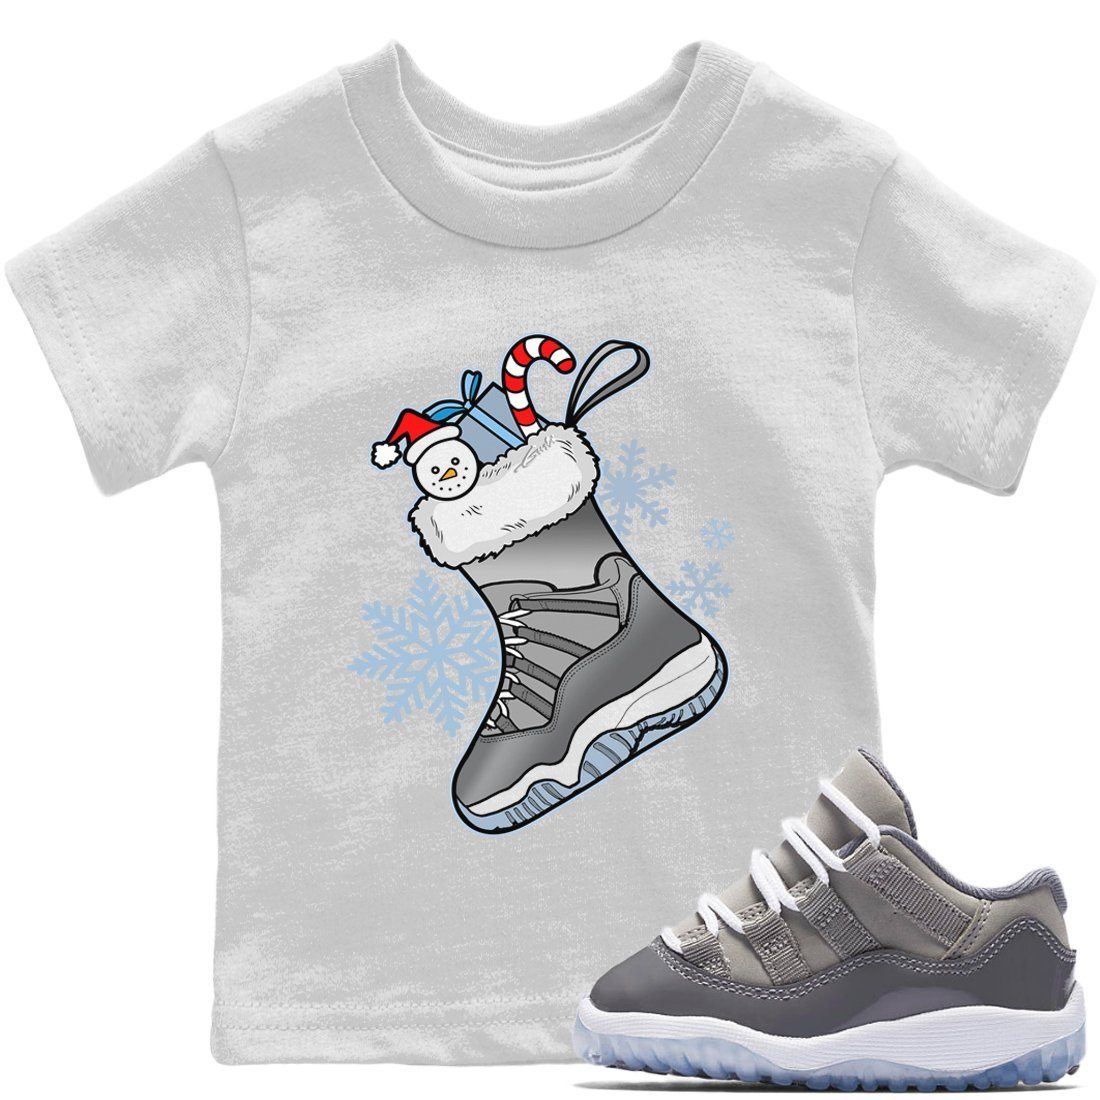 Jordan 11 Cool Grey Sneaker Match Tees Sneaker Stocking Sneaker Tees Jordan 11 Cool Grey Sneaker Release Tees Kids Shirts